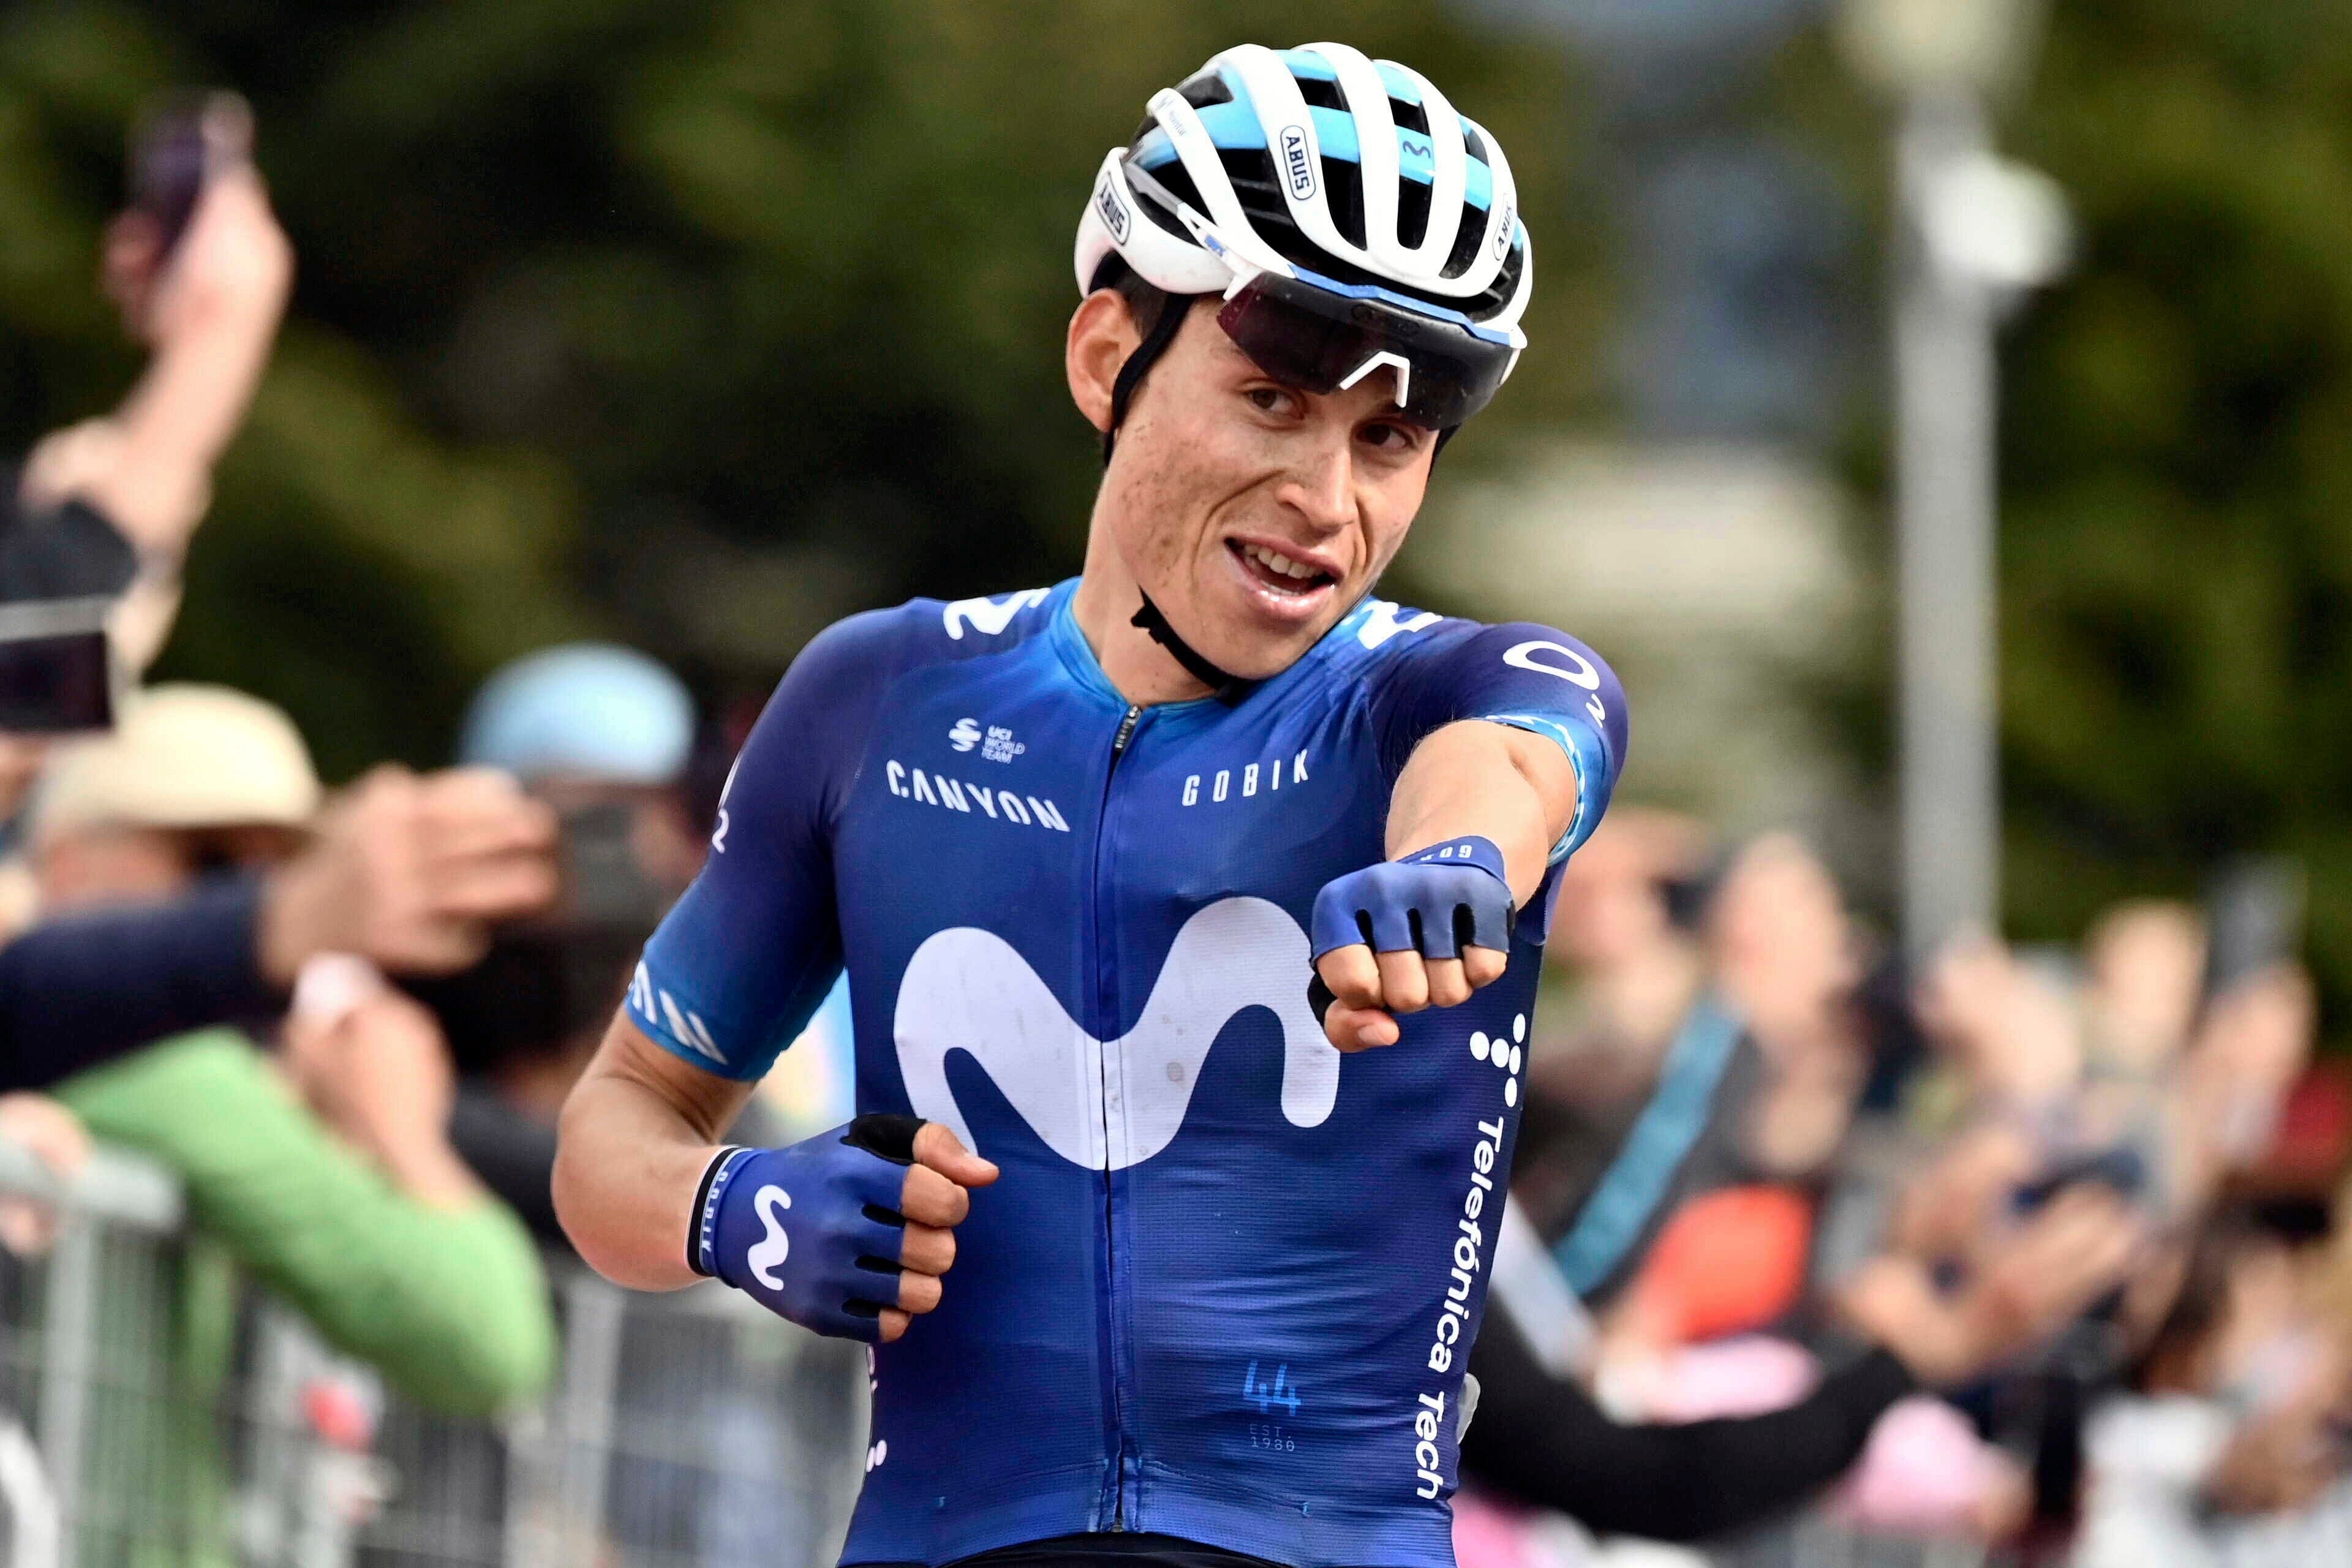 Colombia's Einer Rubio Reyes celebrates winning the 13rd stage